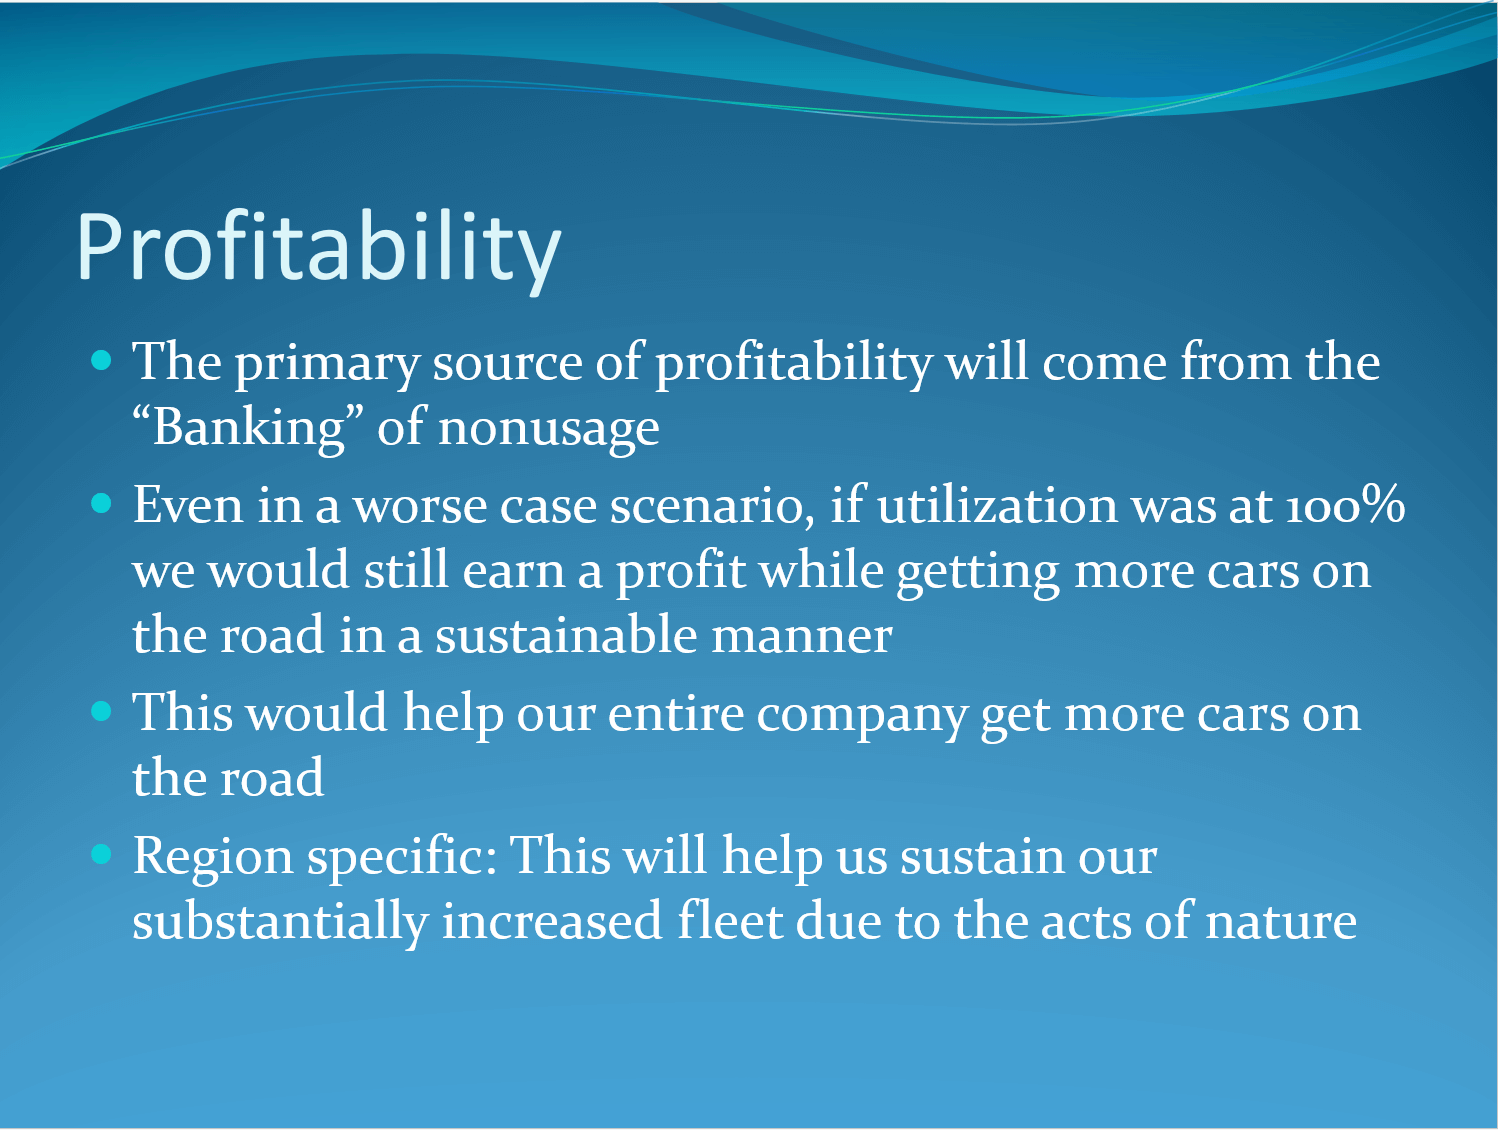 PowerPoint slide from Enterprise Holdings' presntation by Bilal Qizilbash explaining profitability in text.